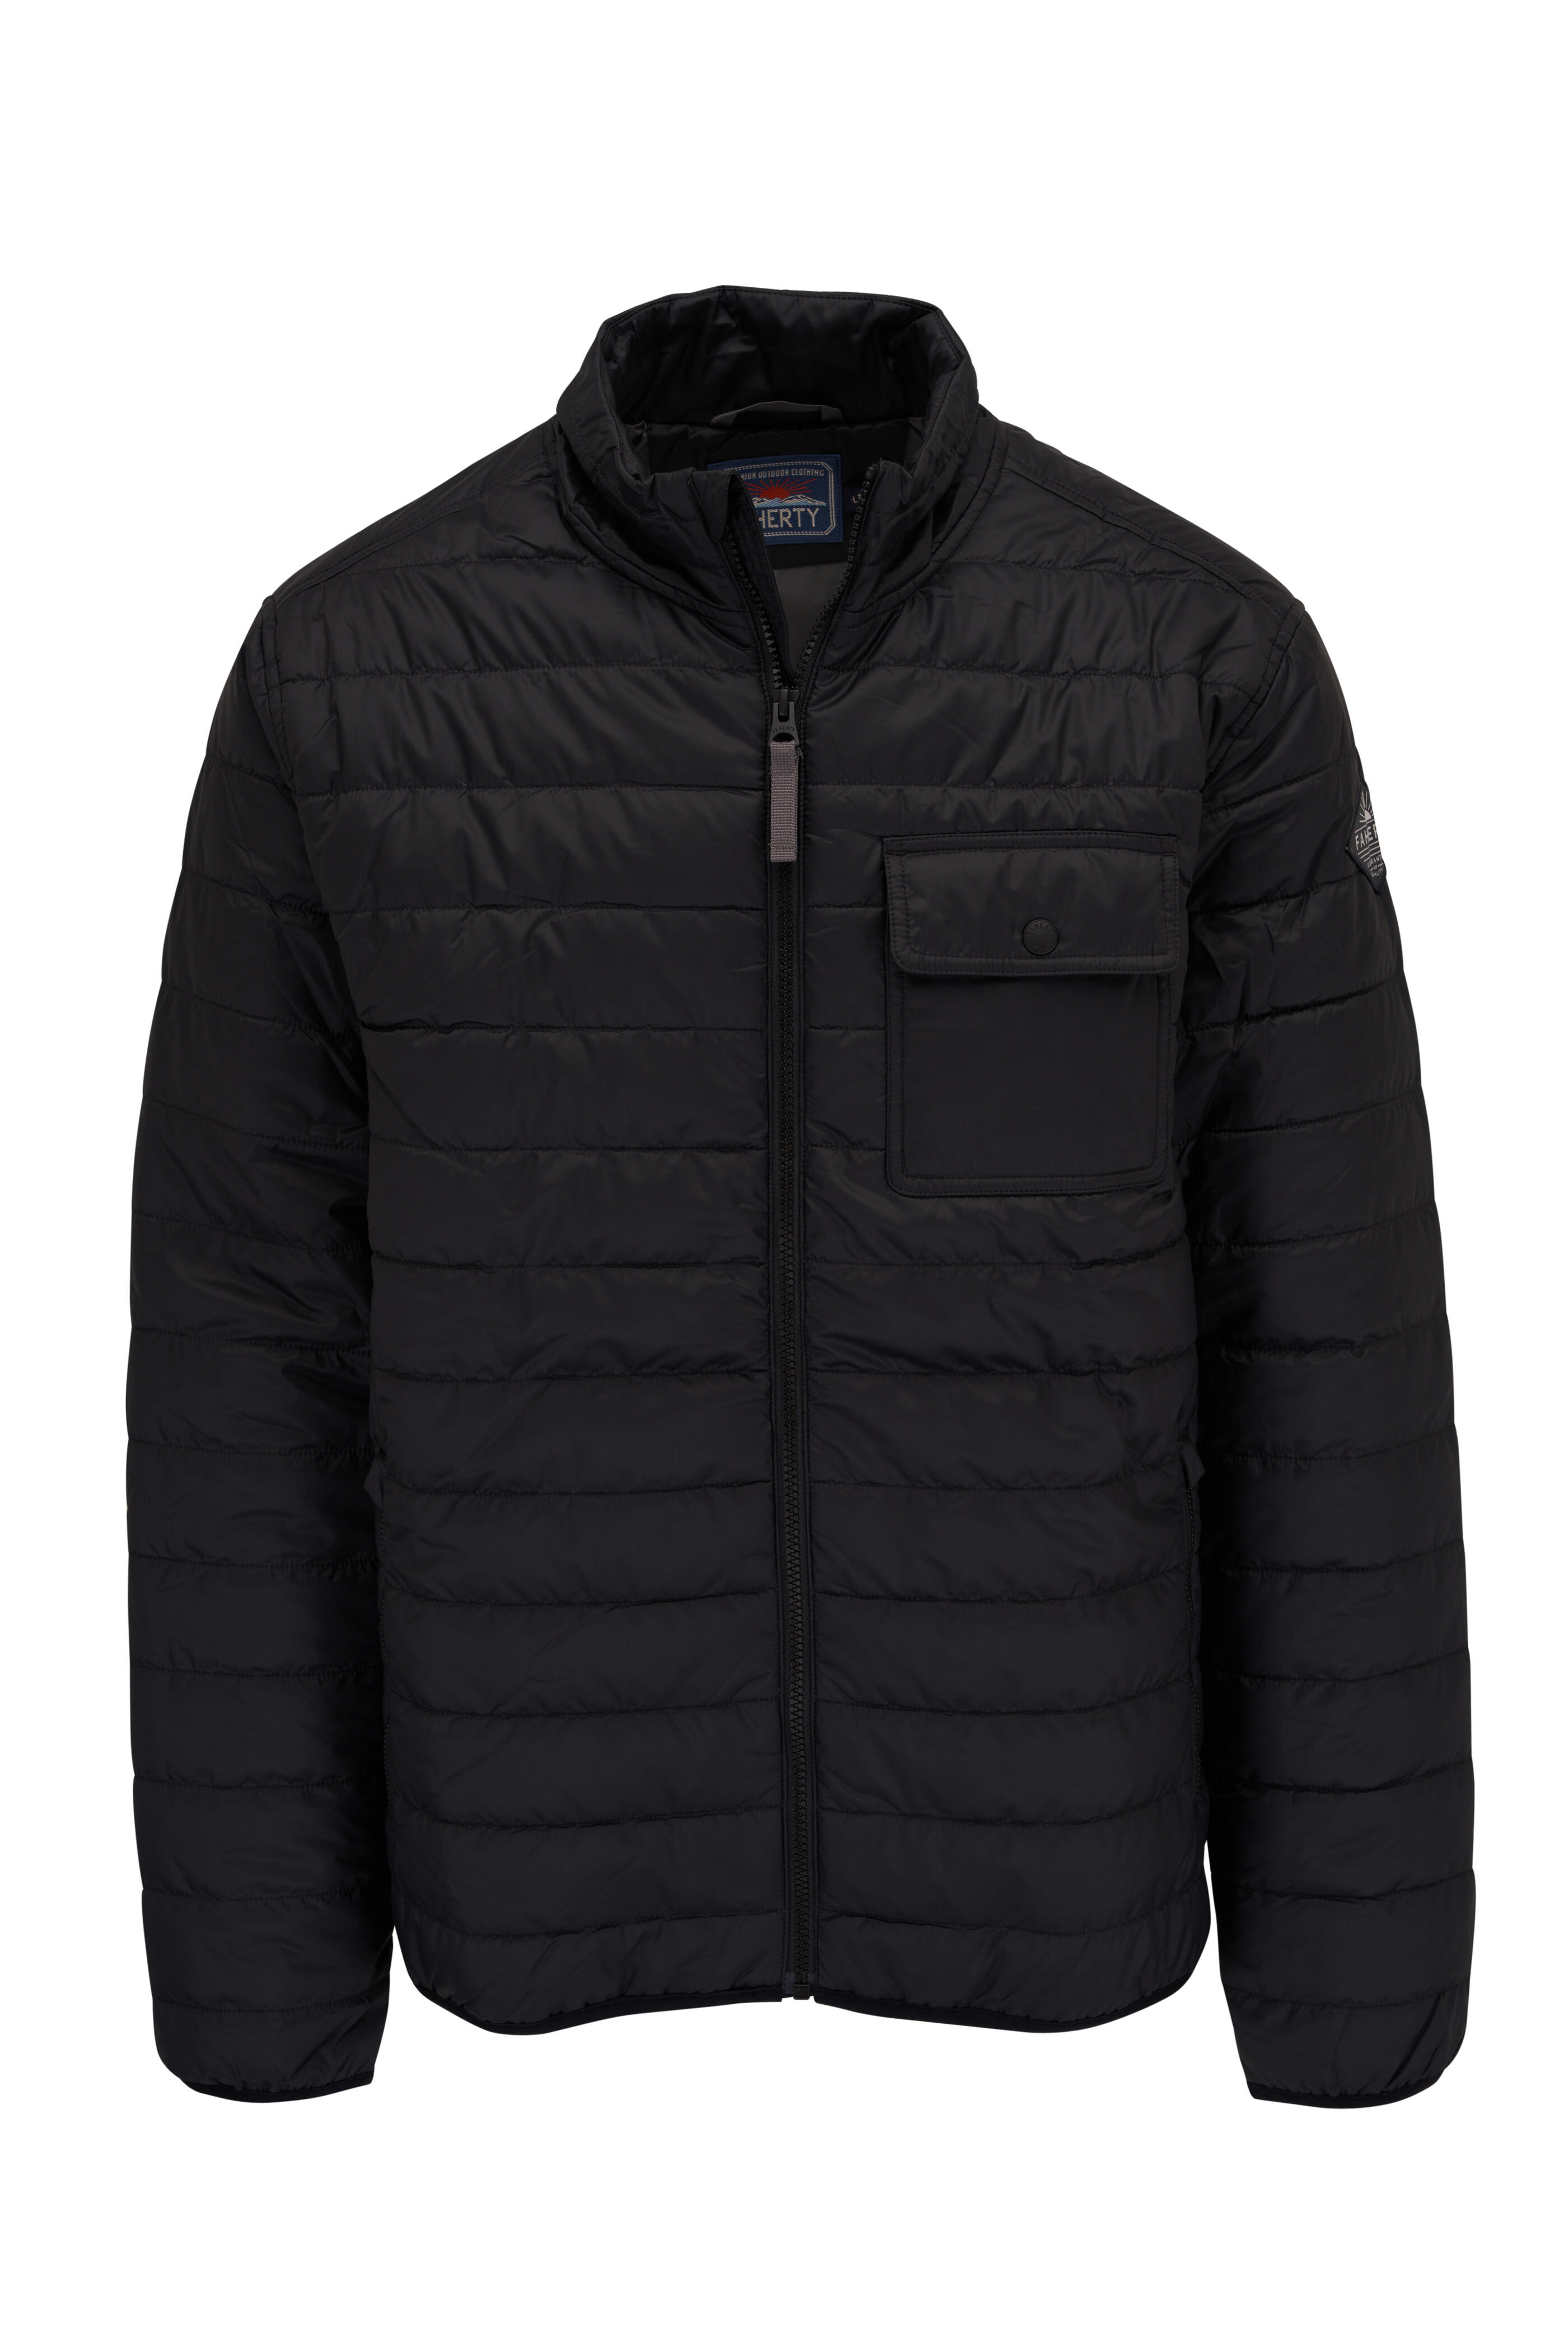 Faherty Brand - Atmosphere Black Full Zip Quilted Jacket